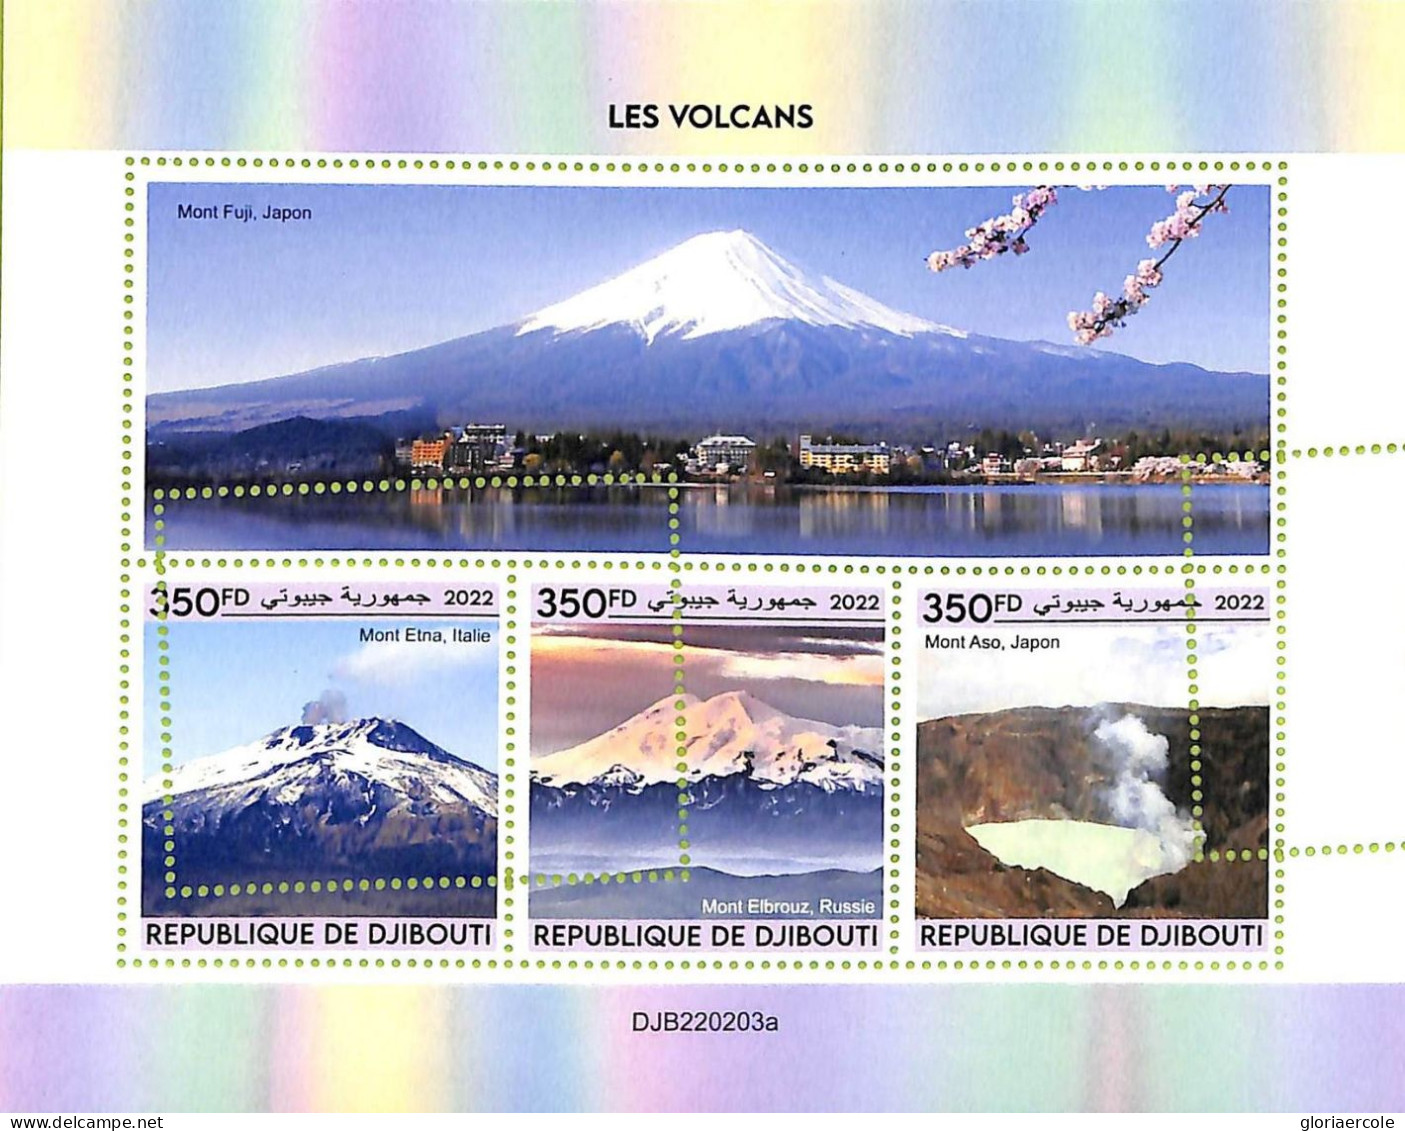 A7514 - DJIBOUTI - ERROR MISPERF Stamp Sheet - 2022 - Volcanoes - Volcanes